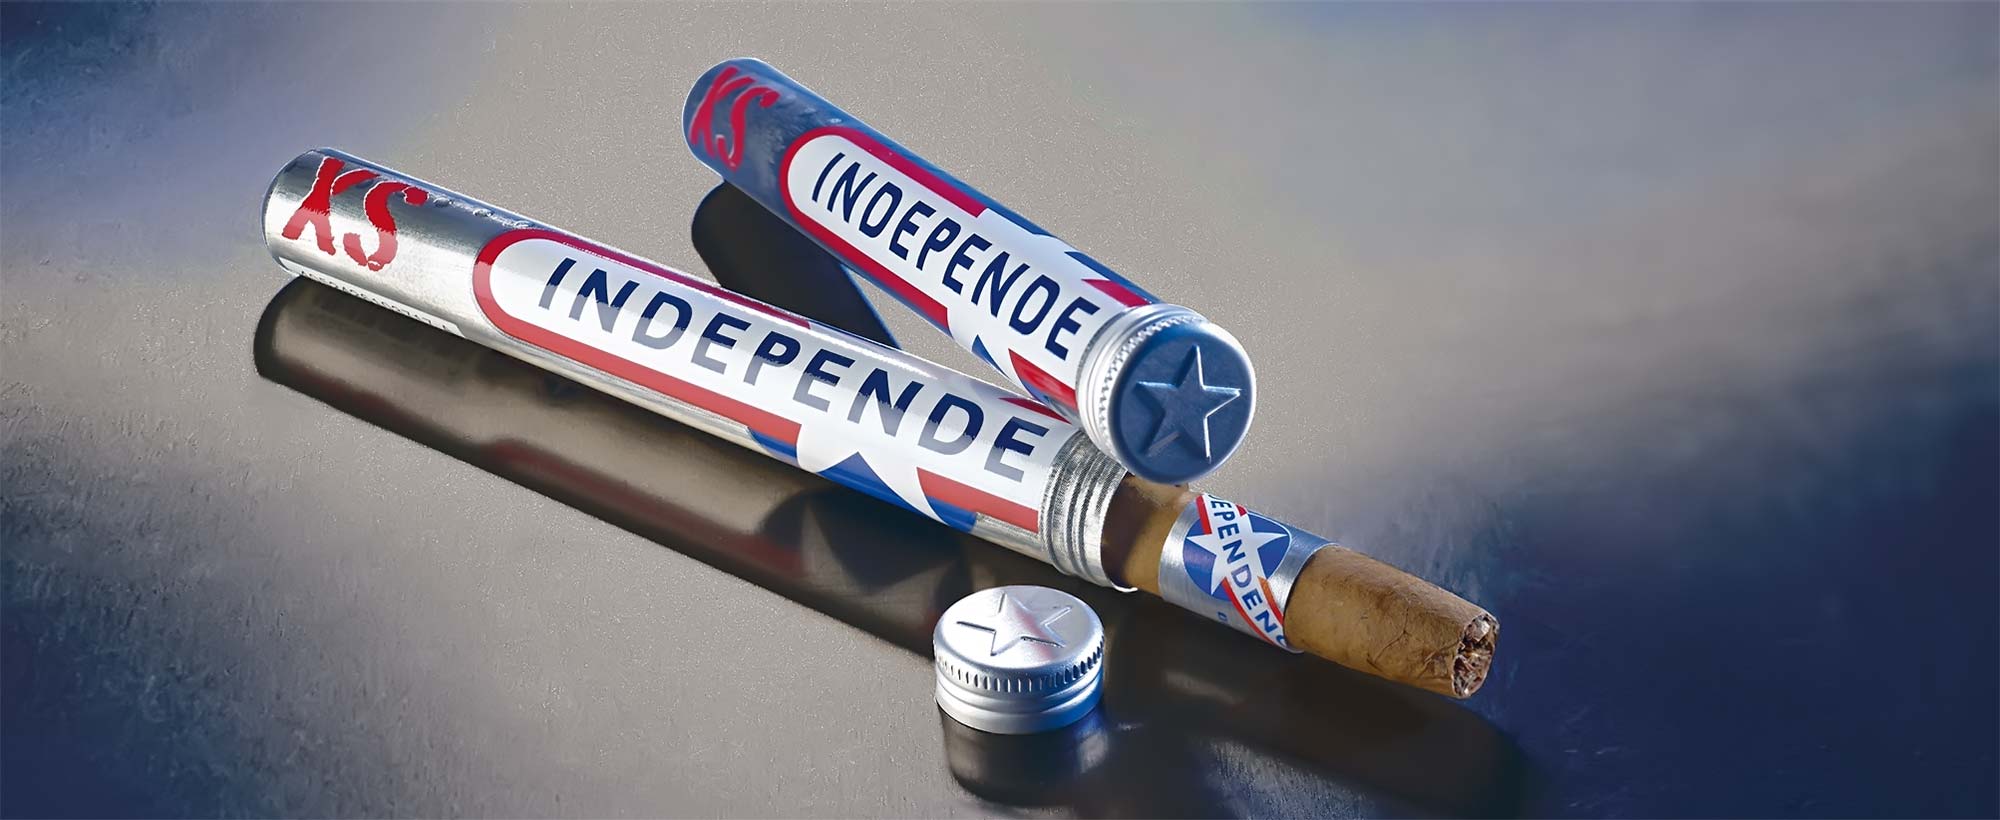 Independence XS Zigarre